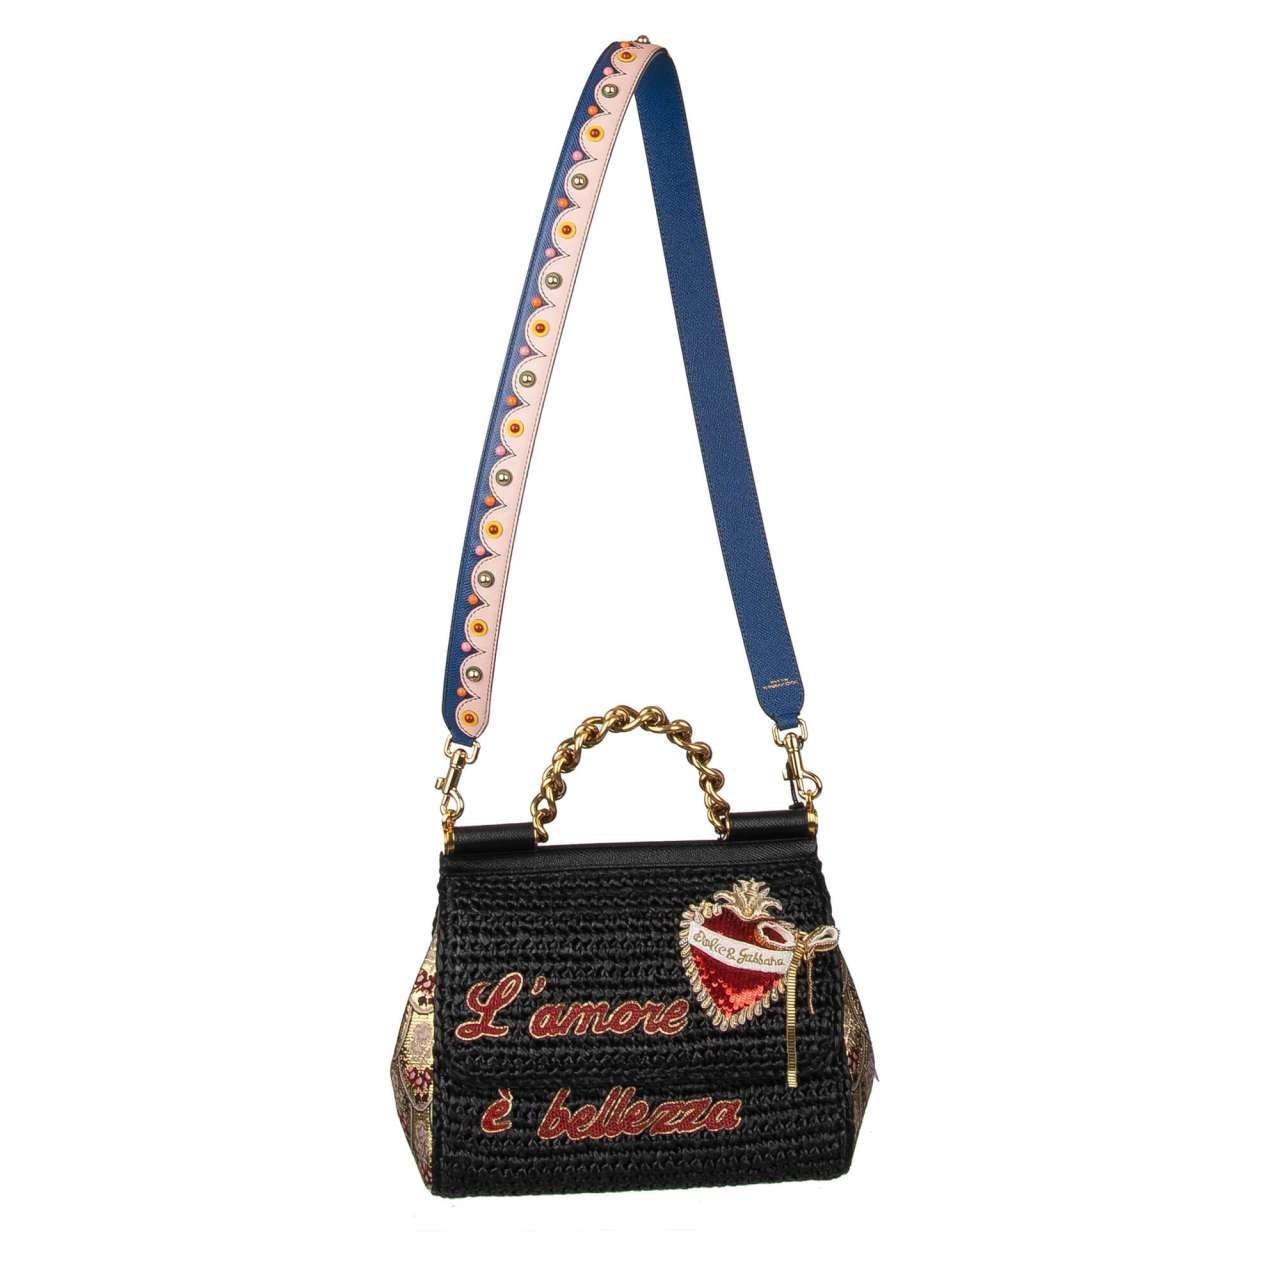 Dolce & Gabbana - Studded Leather Bag Strap Handle Pink Blue Gold For Sale 1